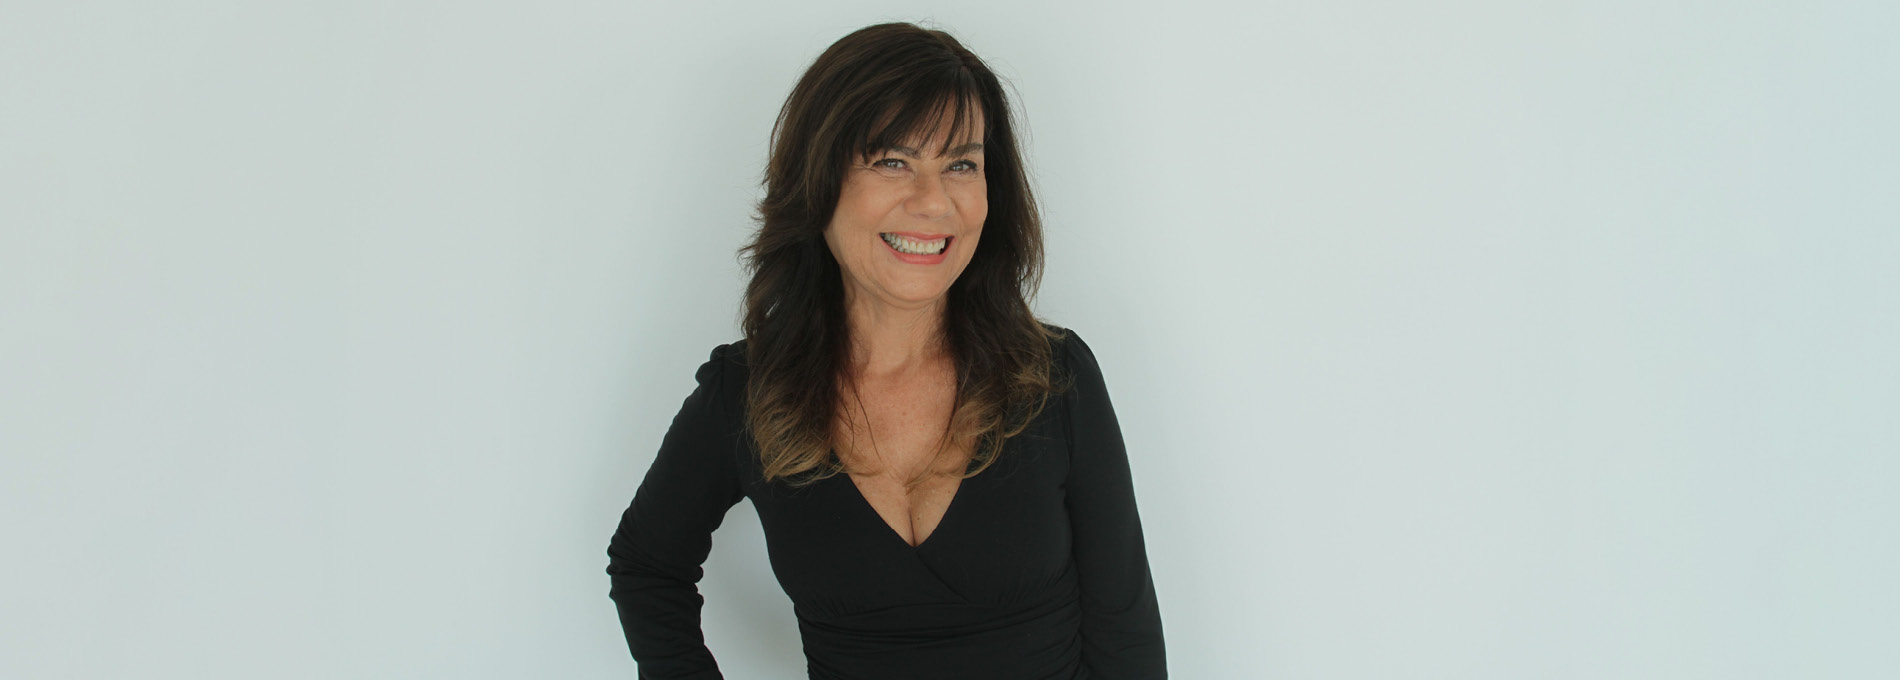 Retrato de Mirian Goldenberg sorrindo vestindo blusa preta e cabelo solto